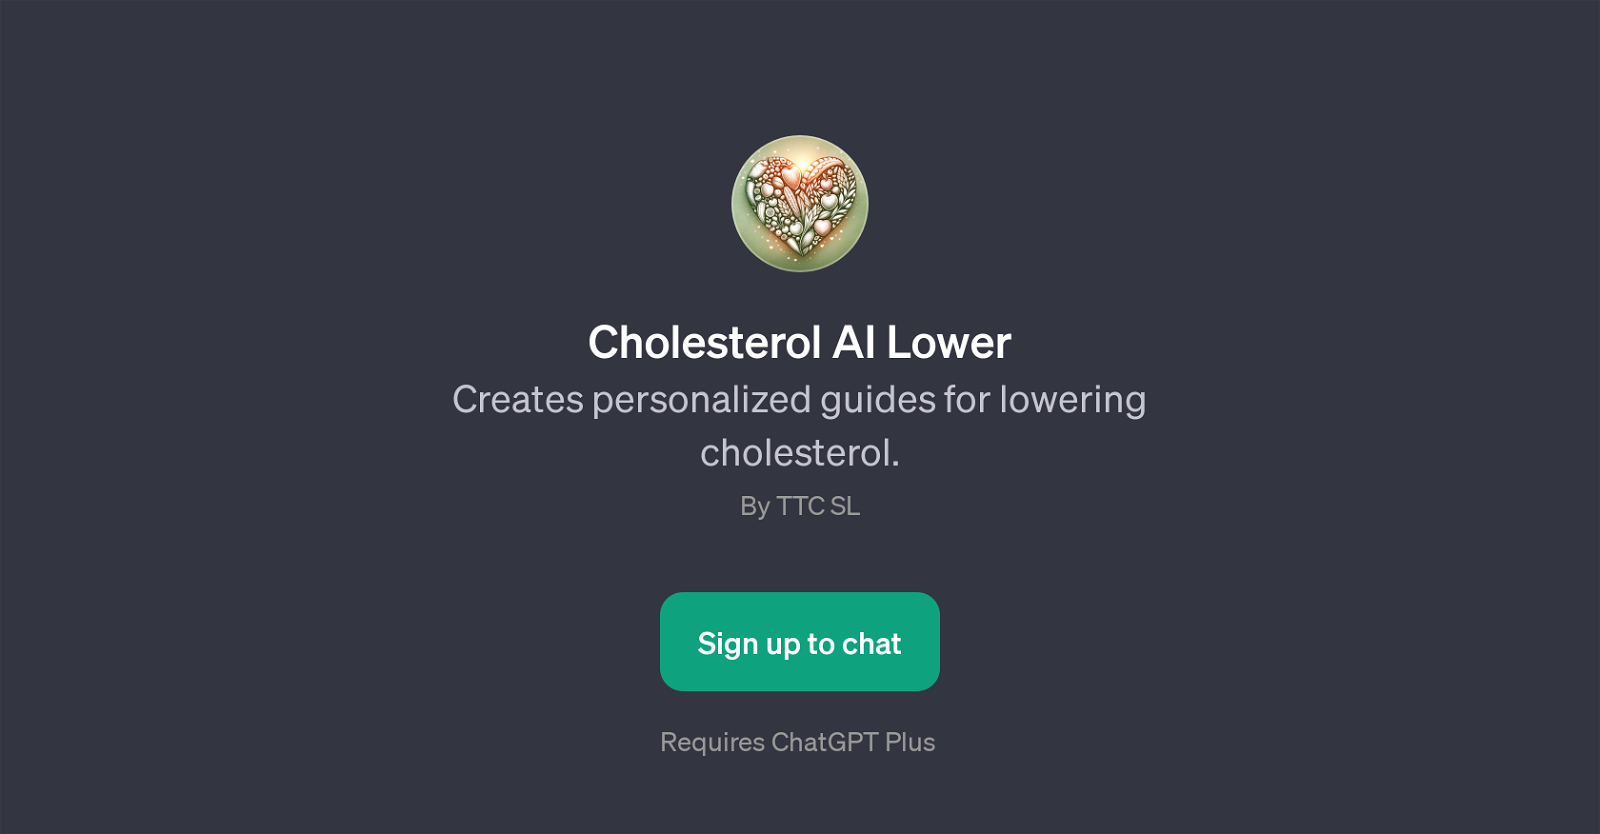 Cholesterol AI Lower website